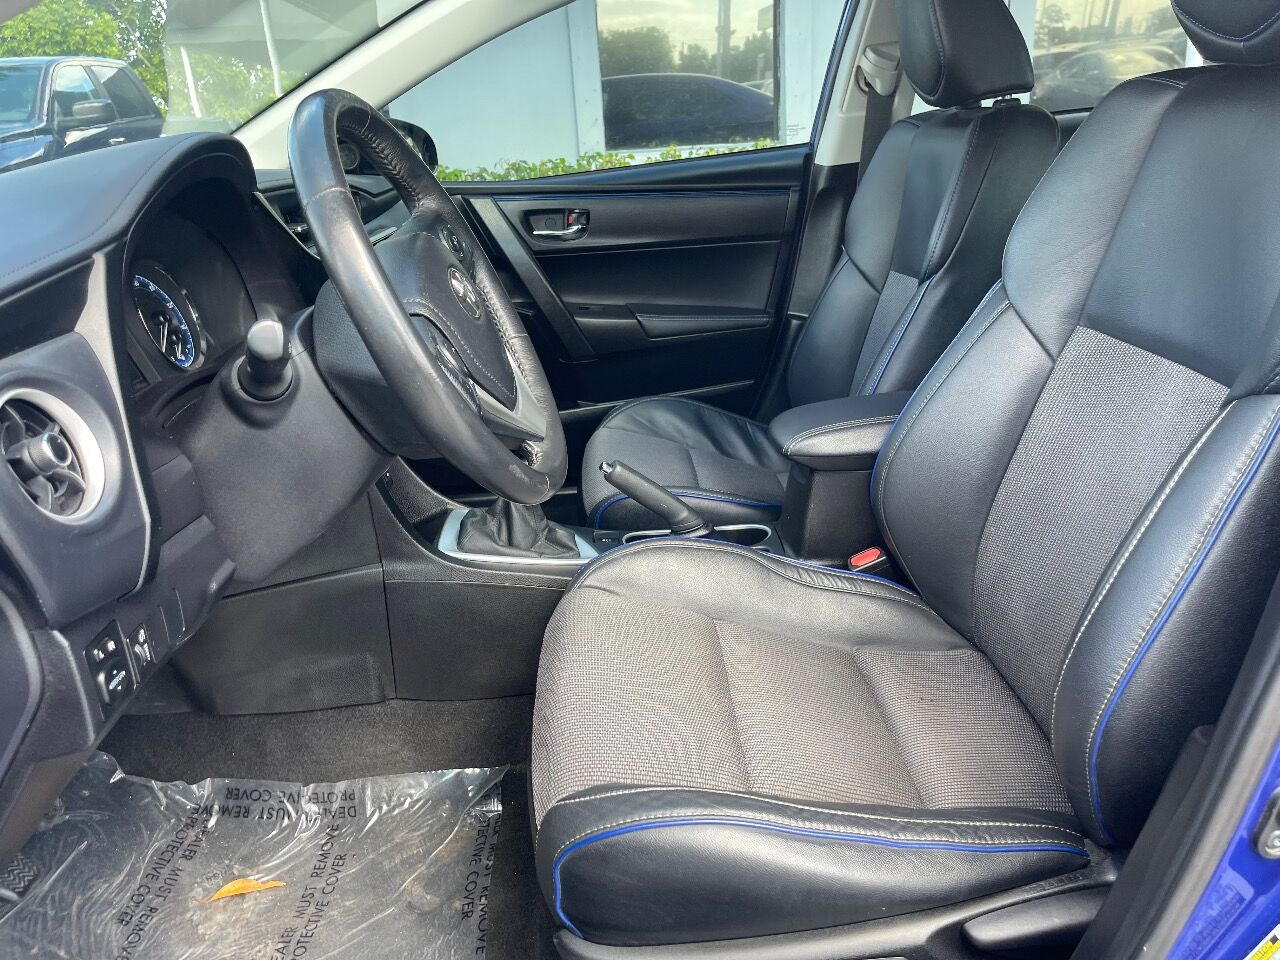 2018 TOYOTA Corolla Sedan - $13,900